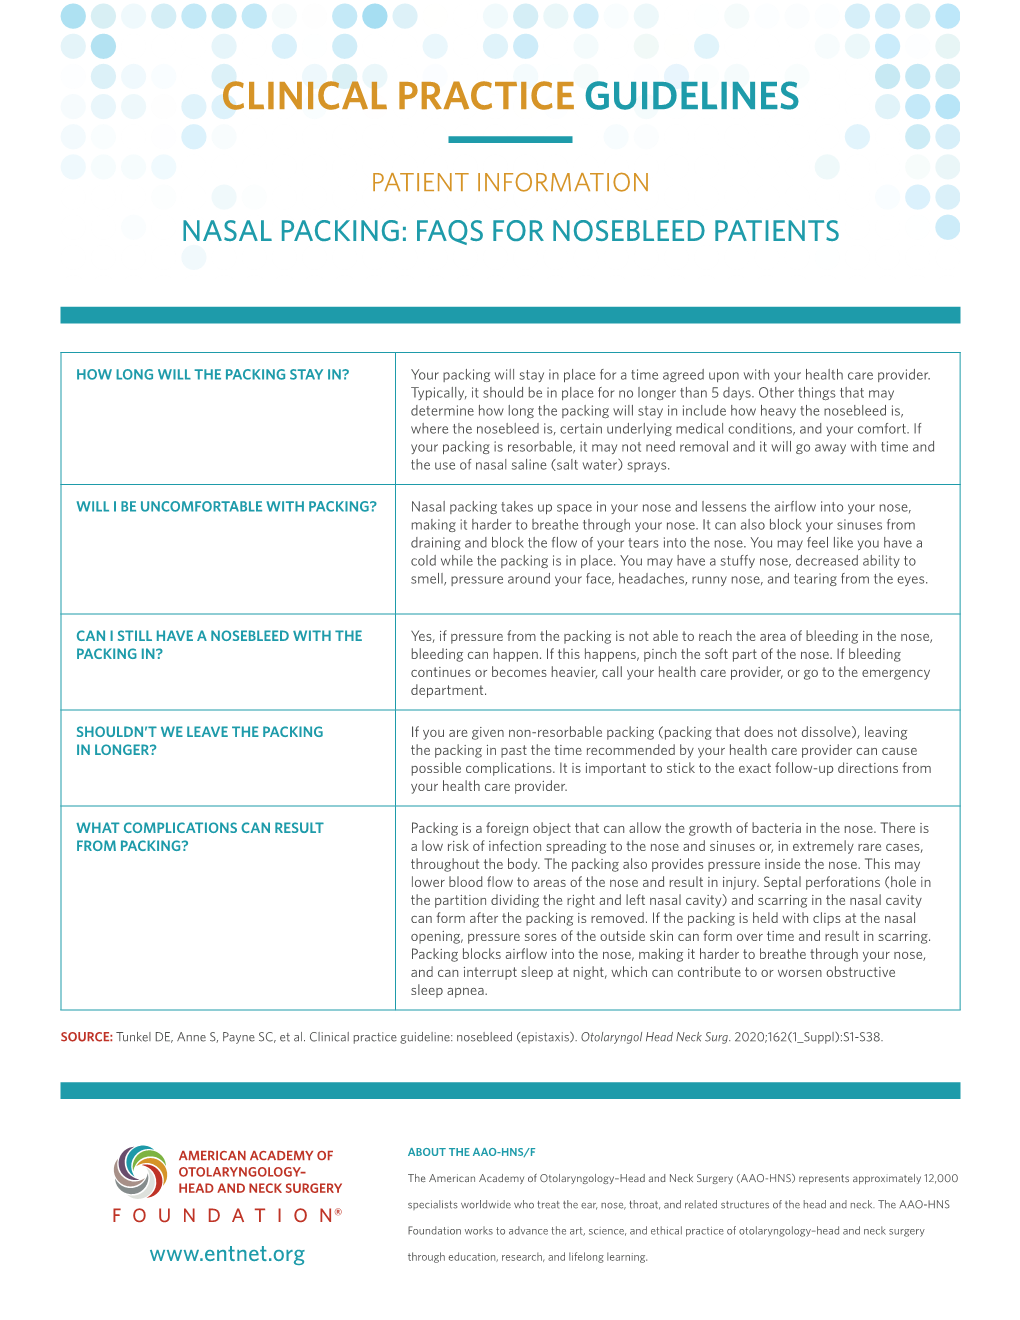 Nasal Packing Faqs